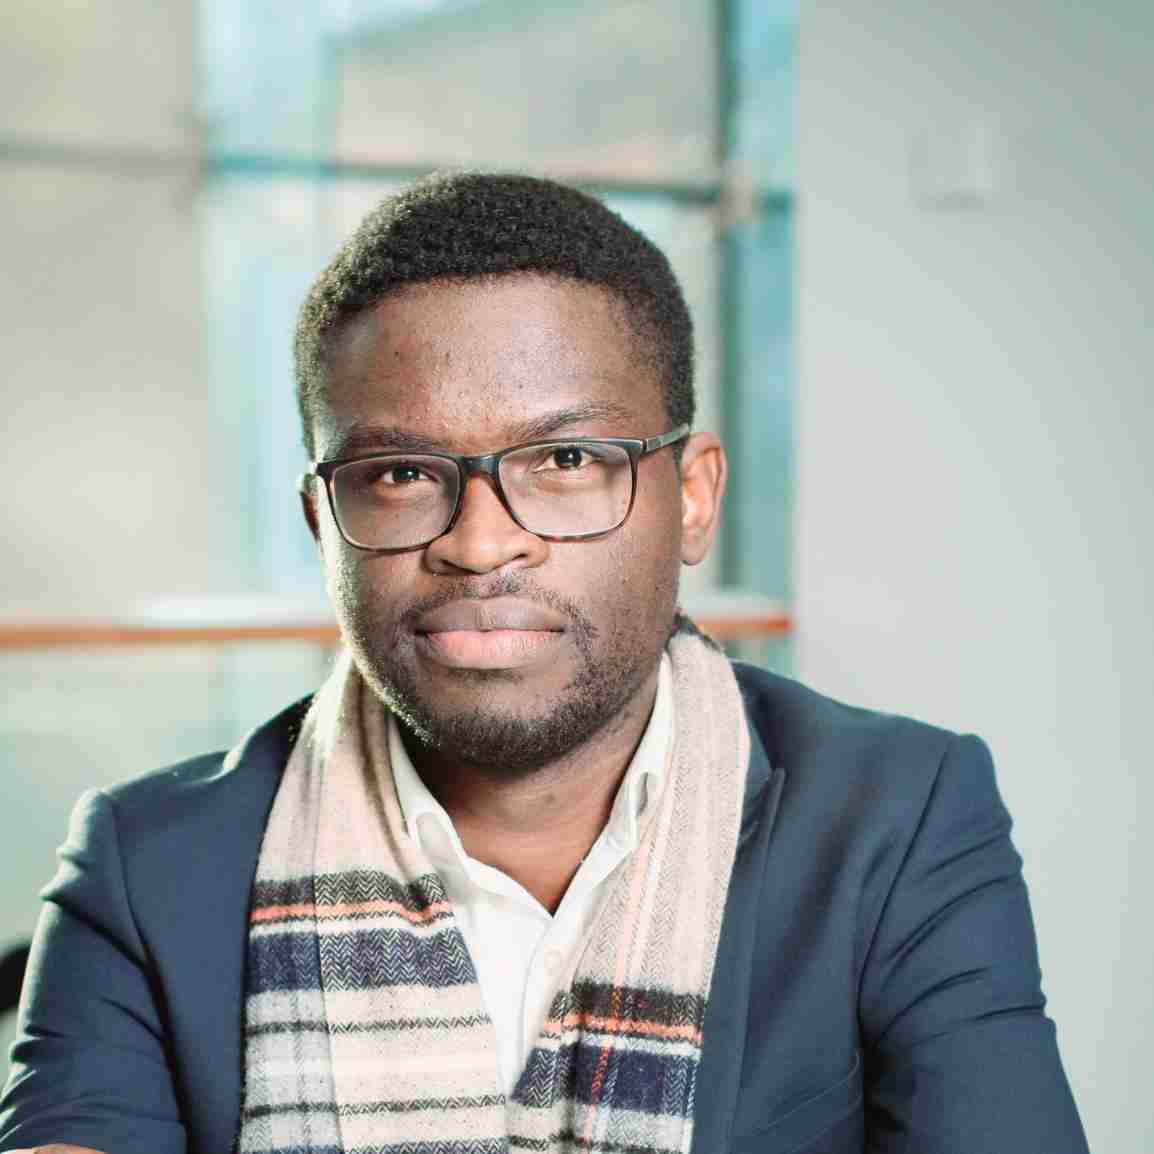 Profile image of Dr Daniel Ogunniyi